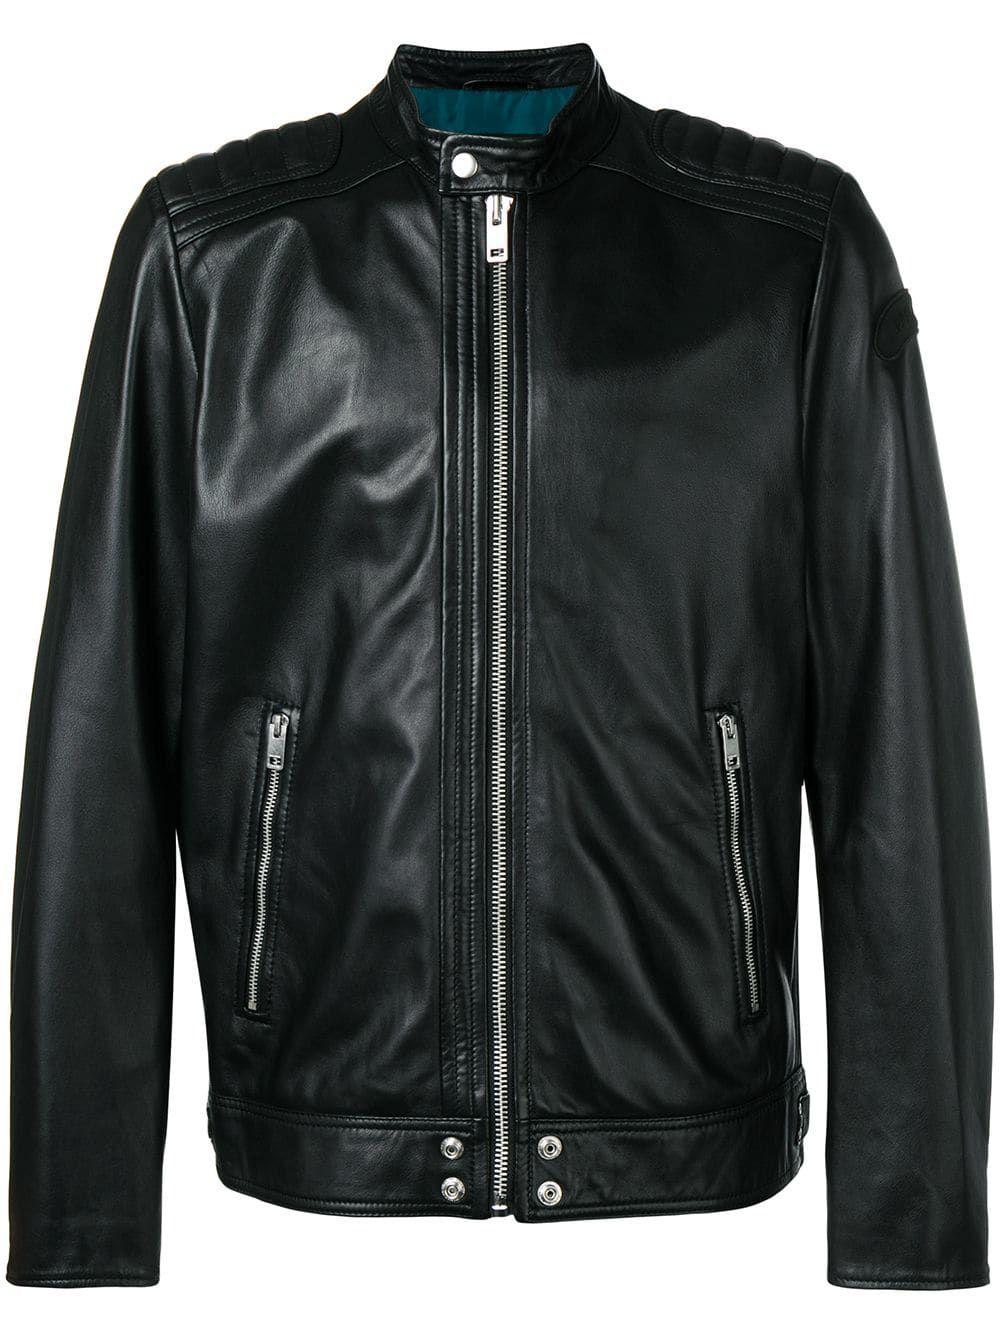 DIESEL Black Leather Outerwear Jacket for Men - Lyst